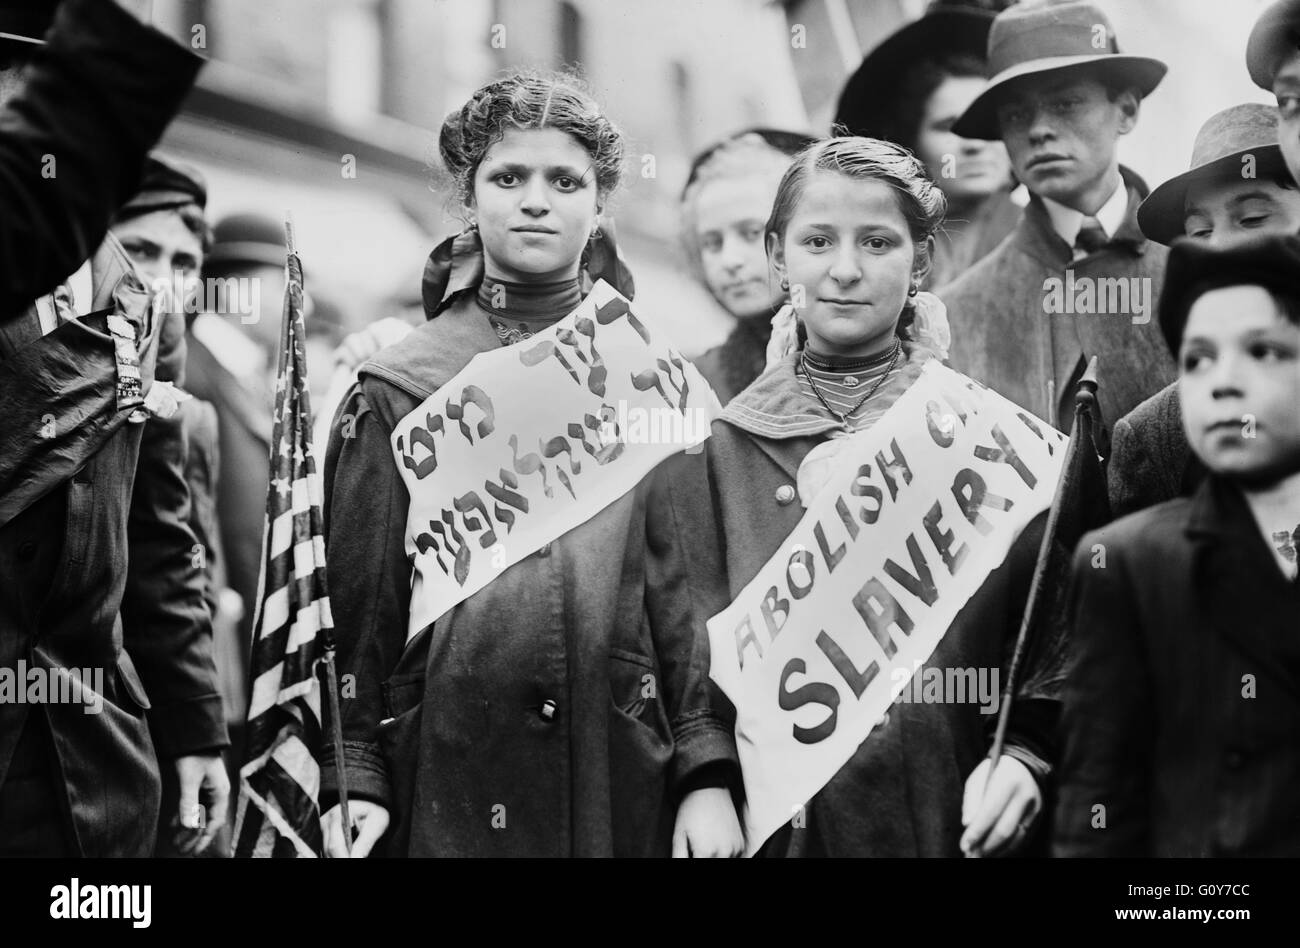 Teen Girls participating in Child Labor Demonstration, Labor Parade, New York City, New York, USA, Bain News Service, 1909 Stock Photo